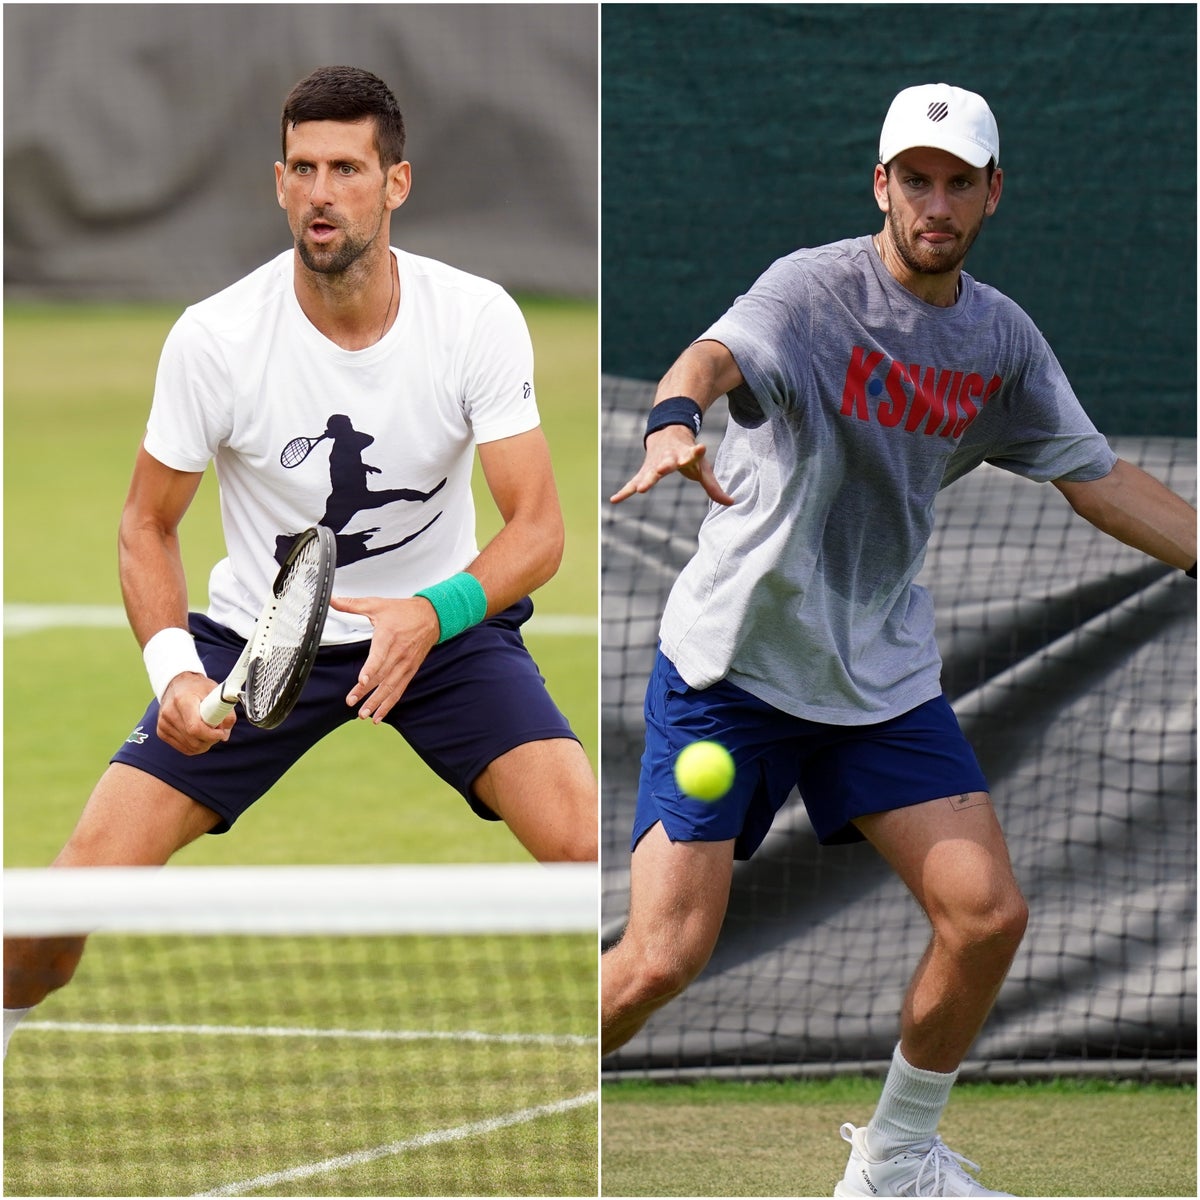 Wimbledon day 12: Cameron Norrie takes on Novak Djokovic as Nick Kyrgios awaits